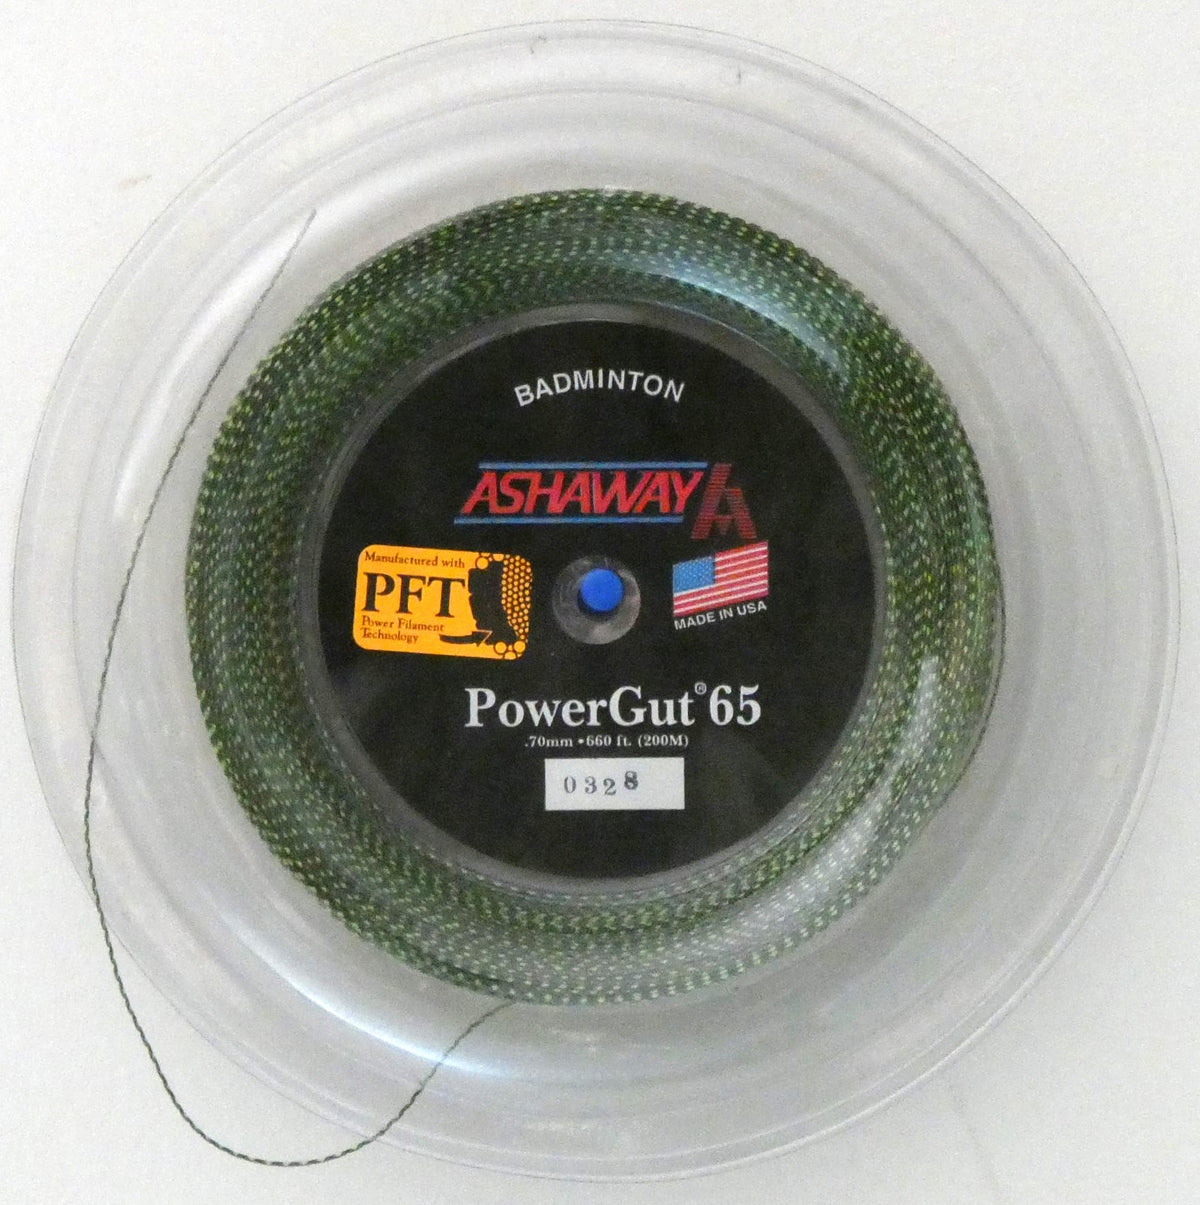 Ashaway PowerGut65 Badminton String, Green with dark green spiral, 200 M REEL